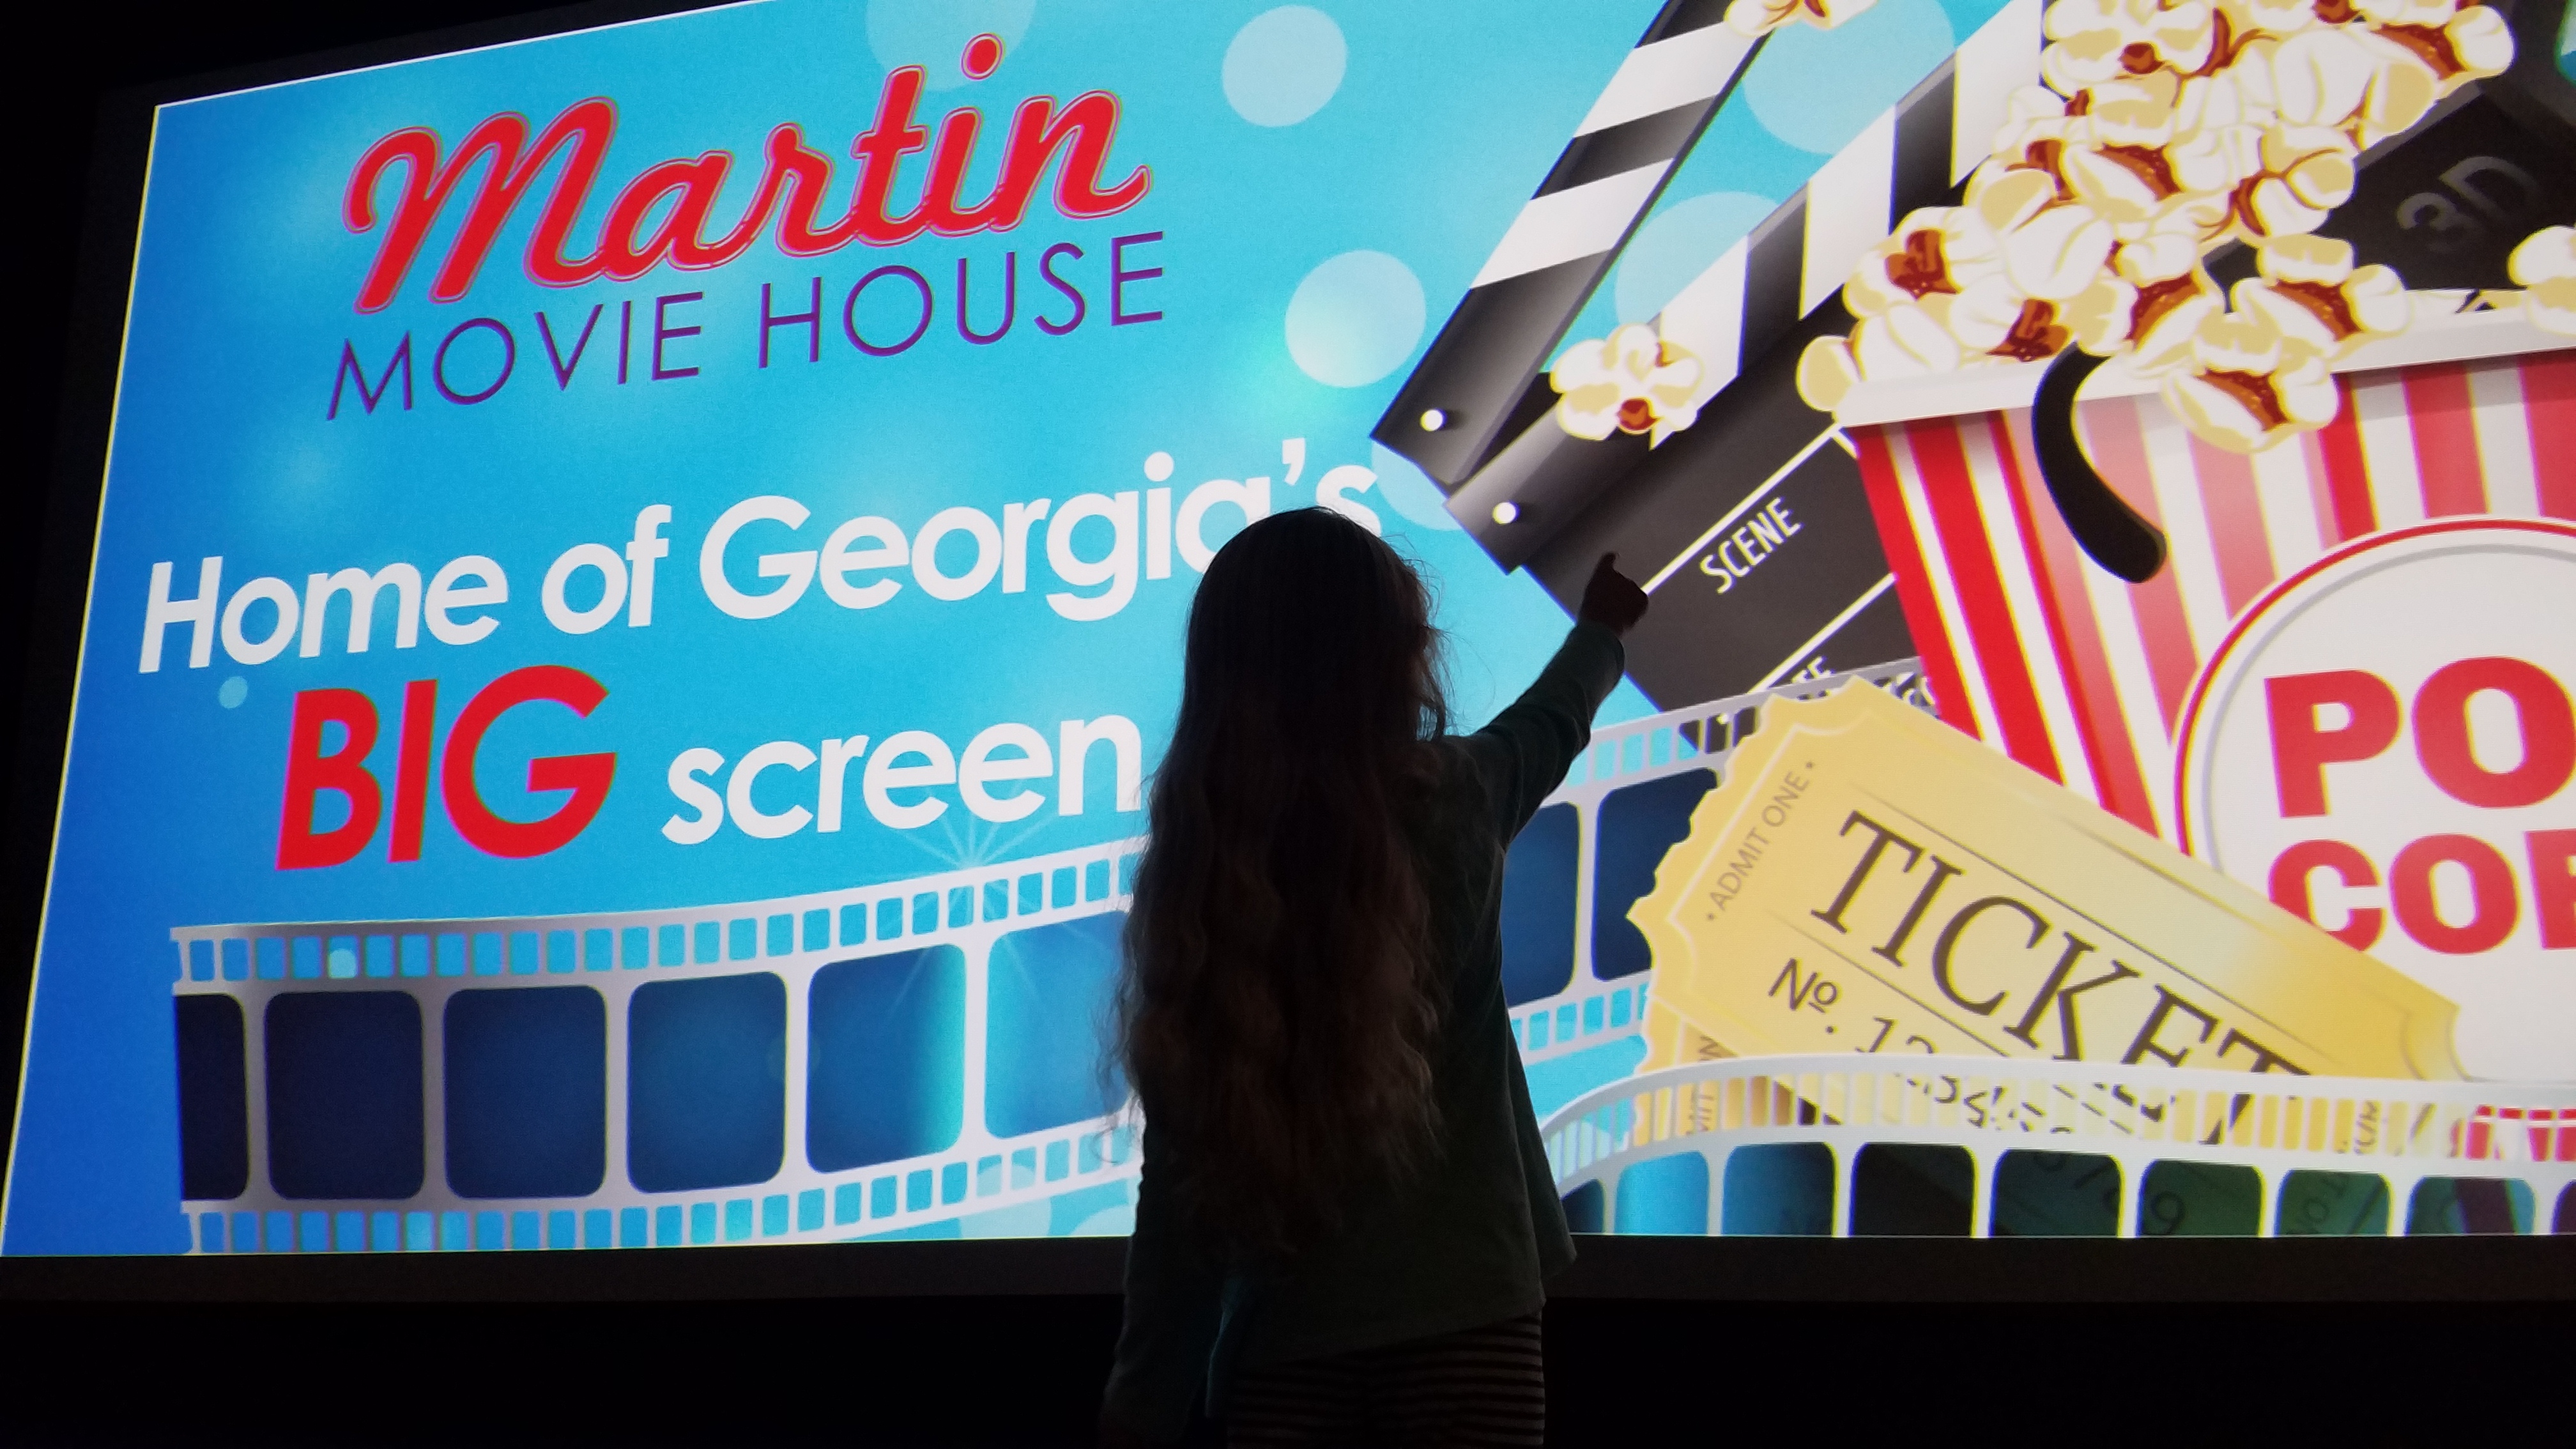 Theatre Dublin Launches Martin Movie House November 17th